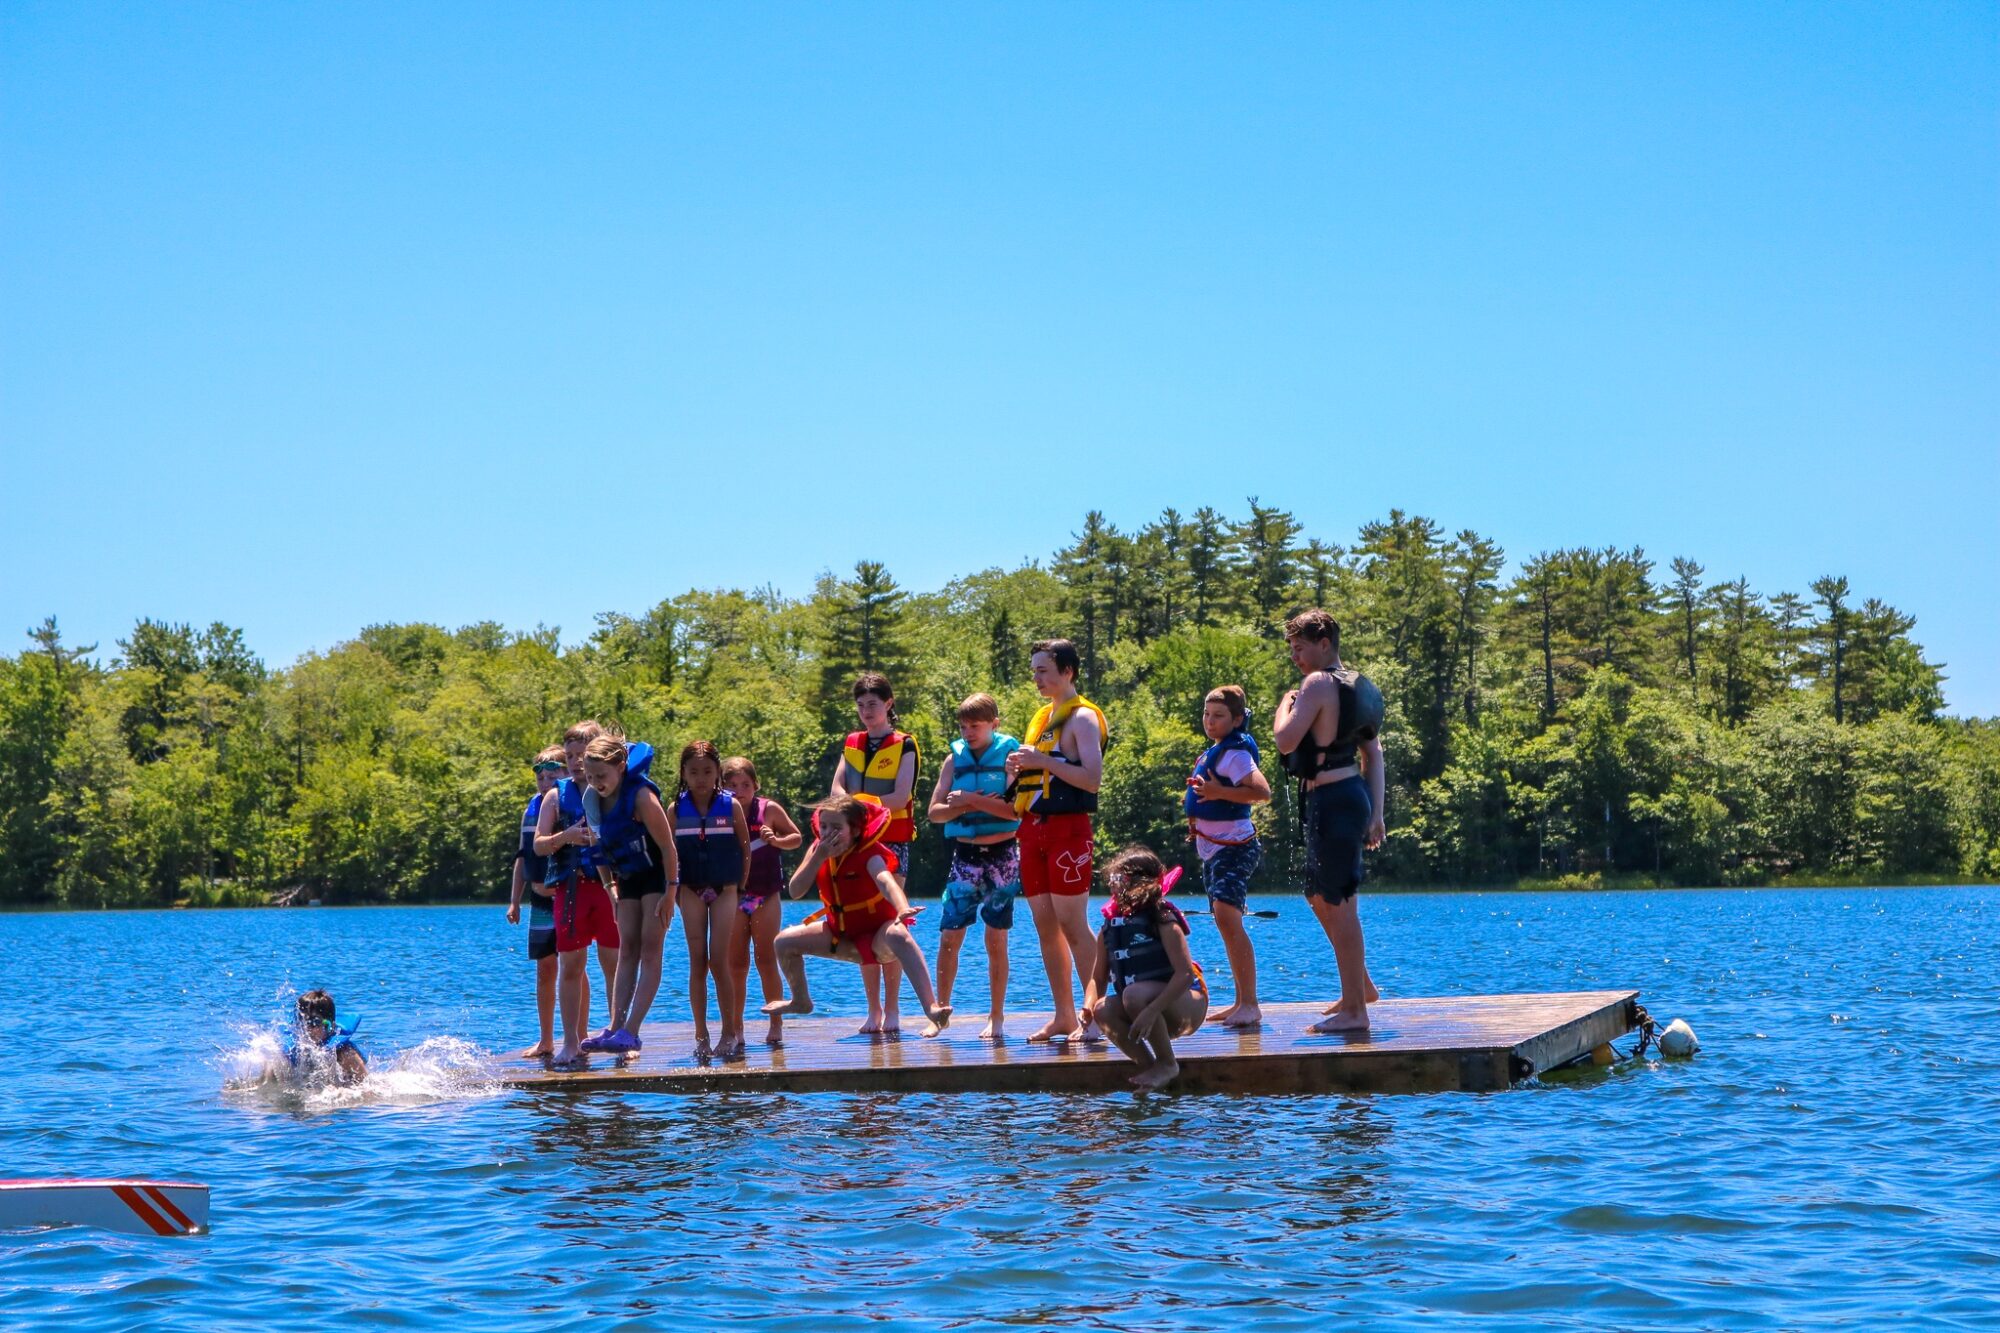 Sackawa Canoe Club Summer Camps (Family Fun Halifax)